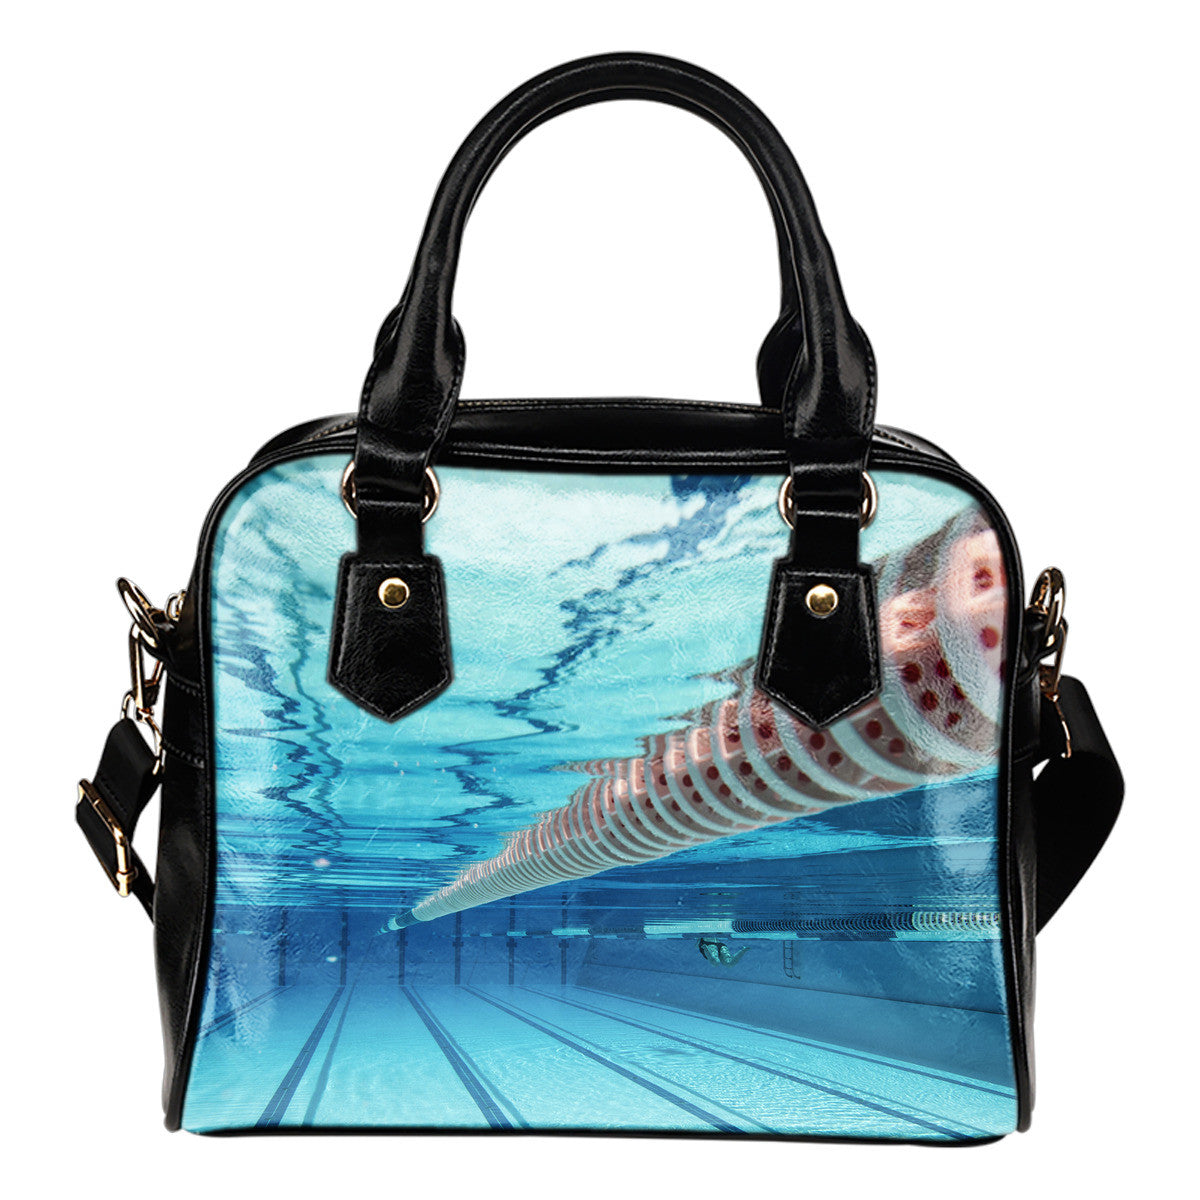 Swimming Pool Handbag